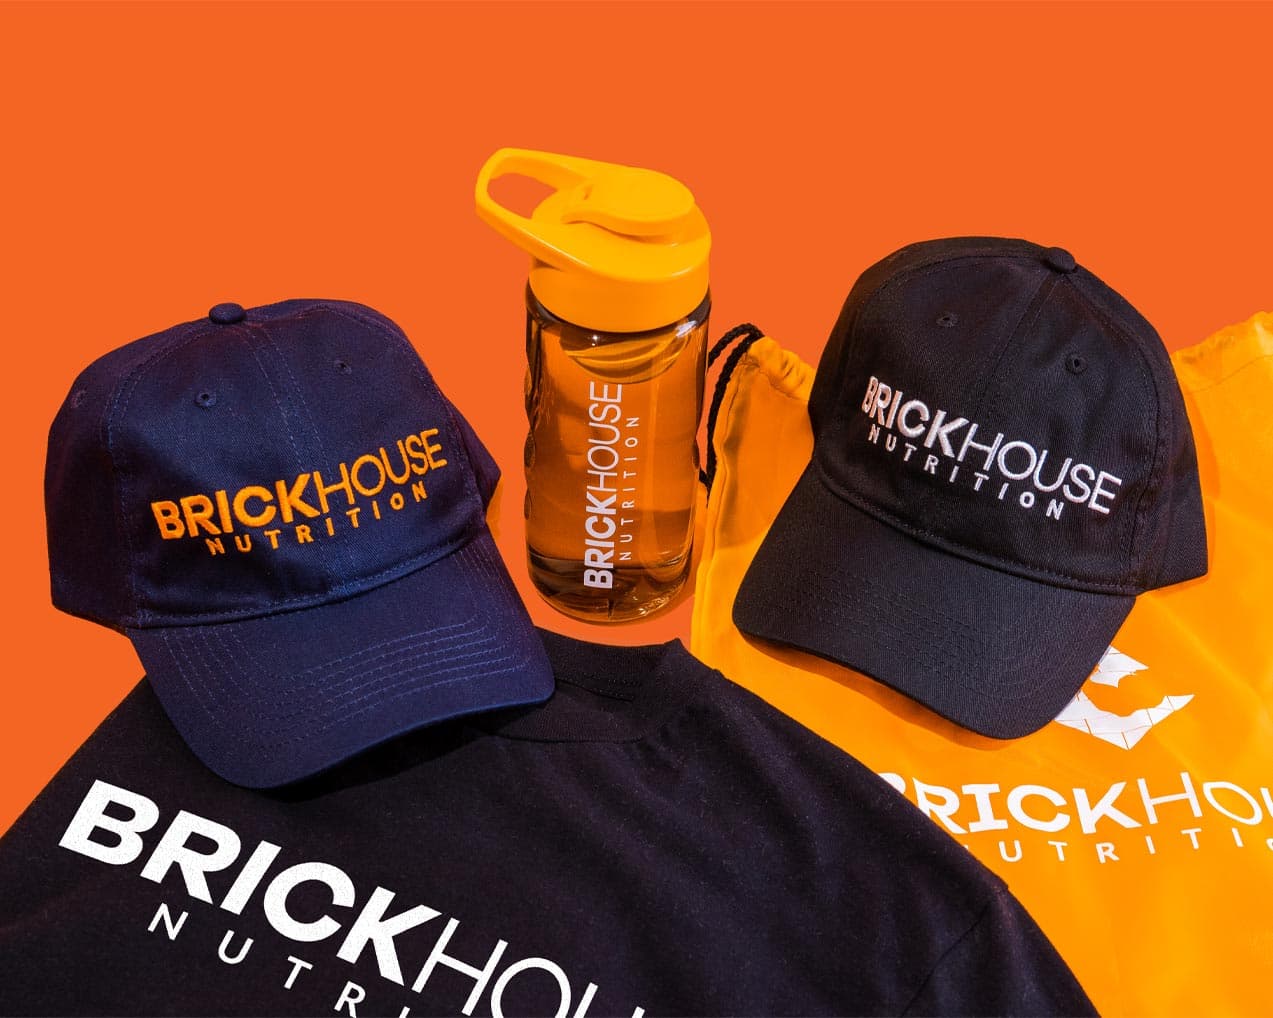 BrickHouse Nutrition gear